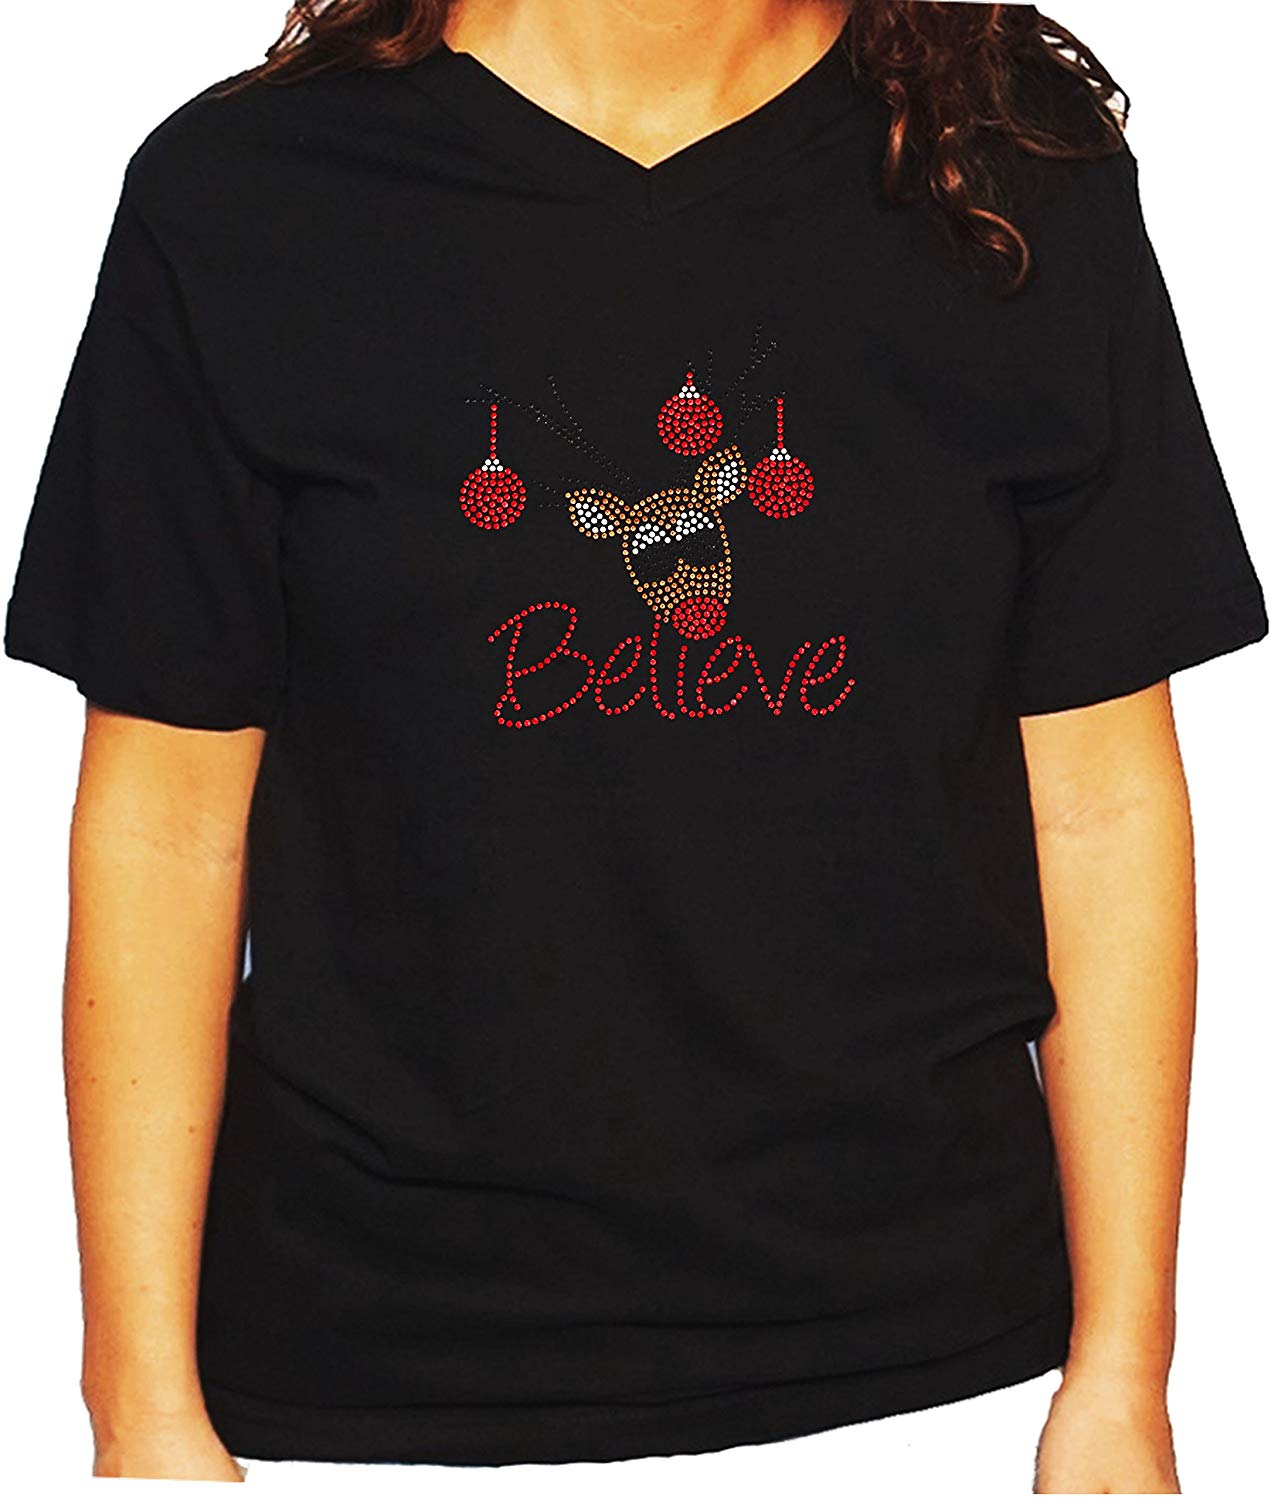 Women's / Unisex T-Shirt with Believe Reindeer In Rhinestuds